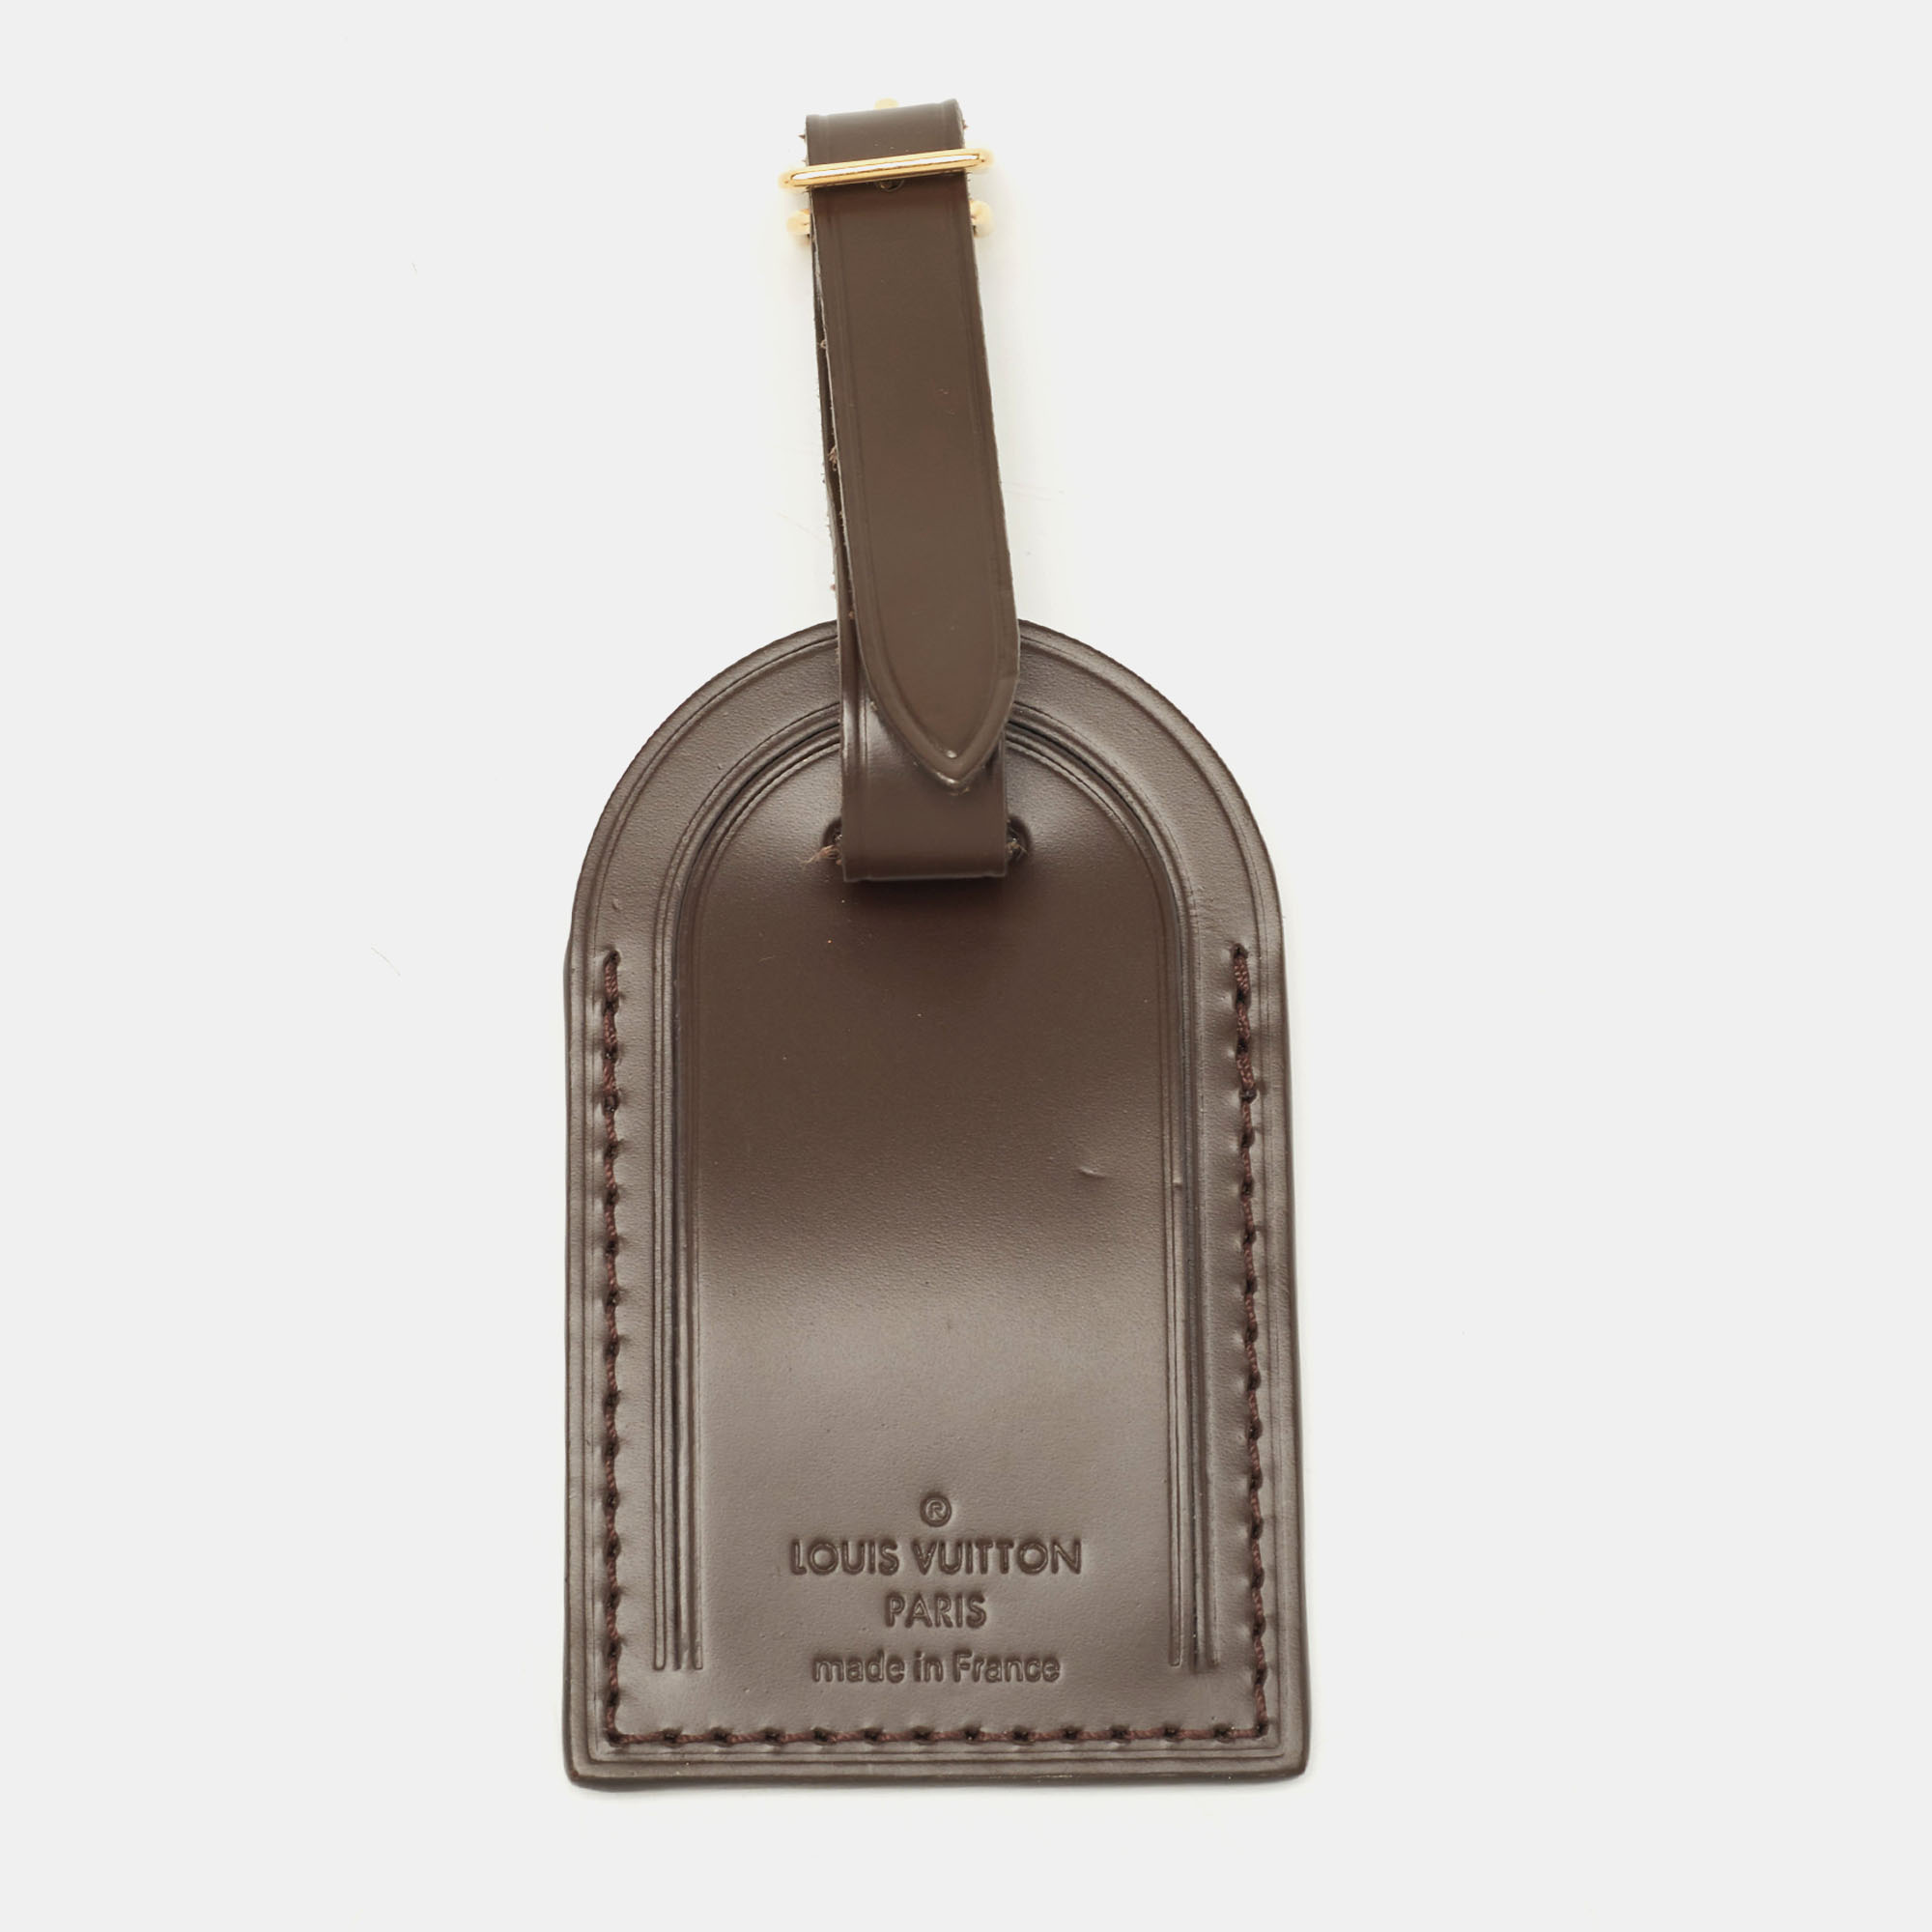 Louis Vuitton Dark Brown Leather Luggage Name Tag